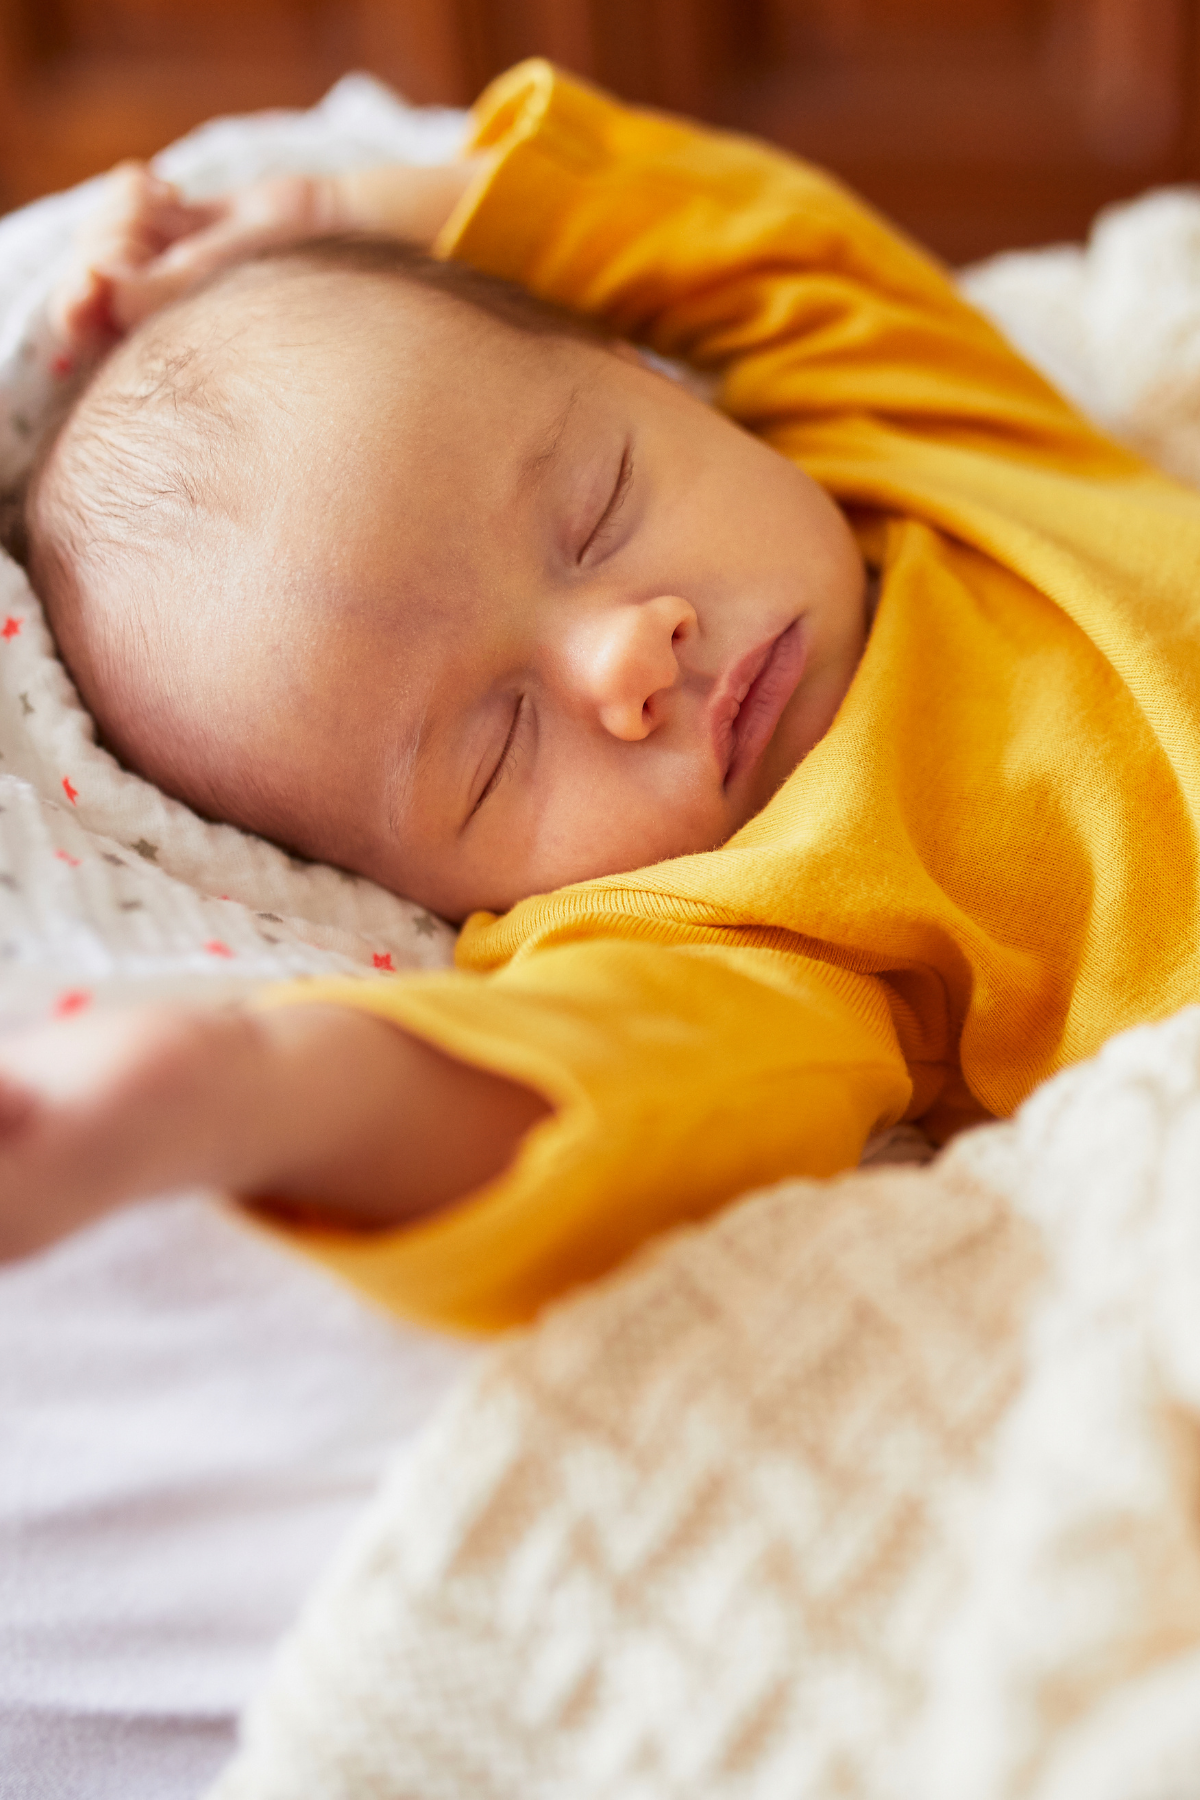 Baby girl sleeps while wearing a yellow shirt.